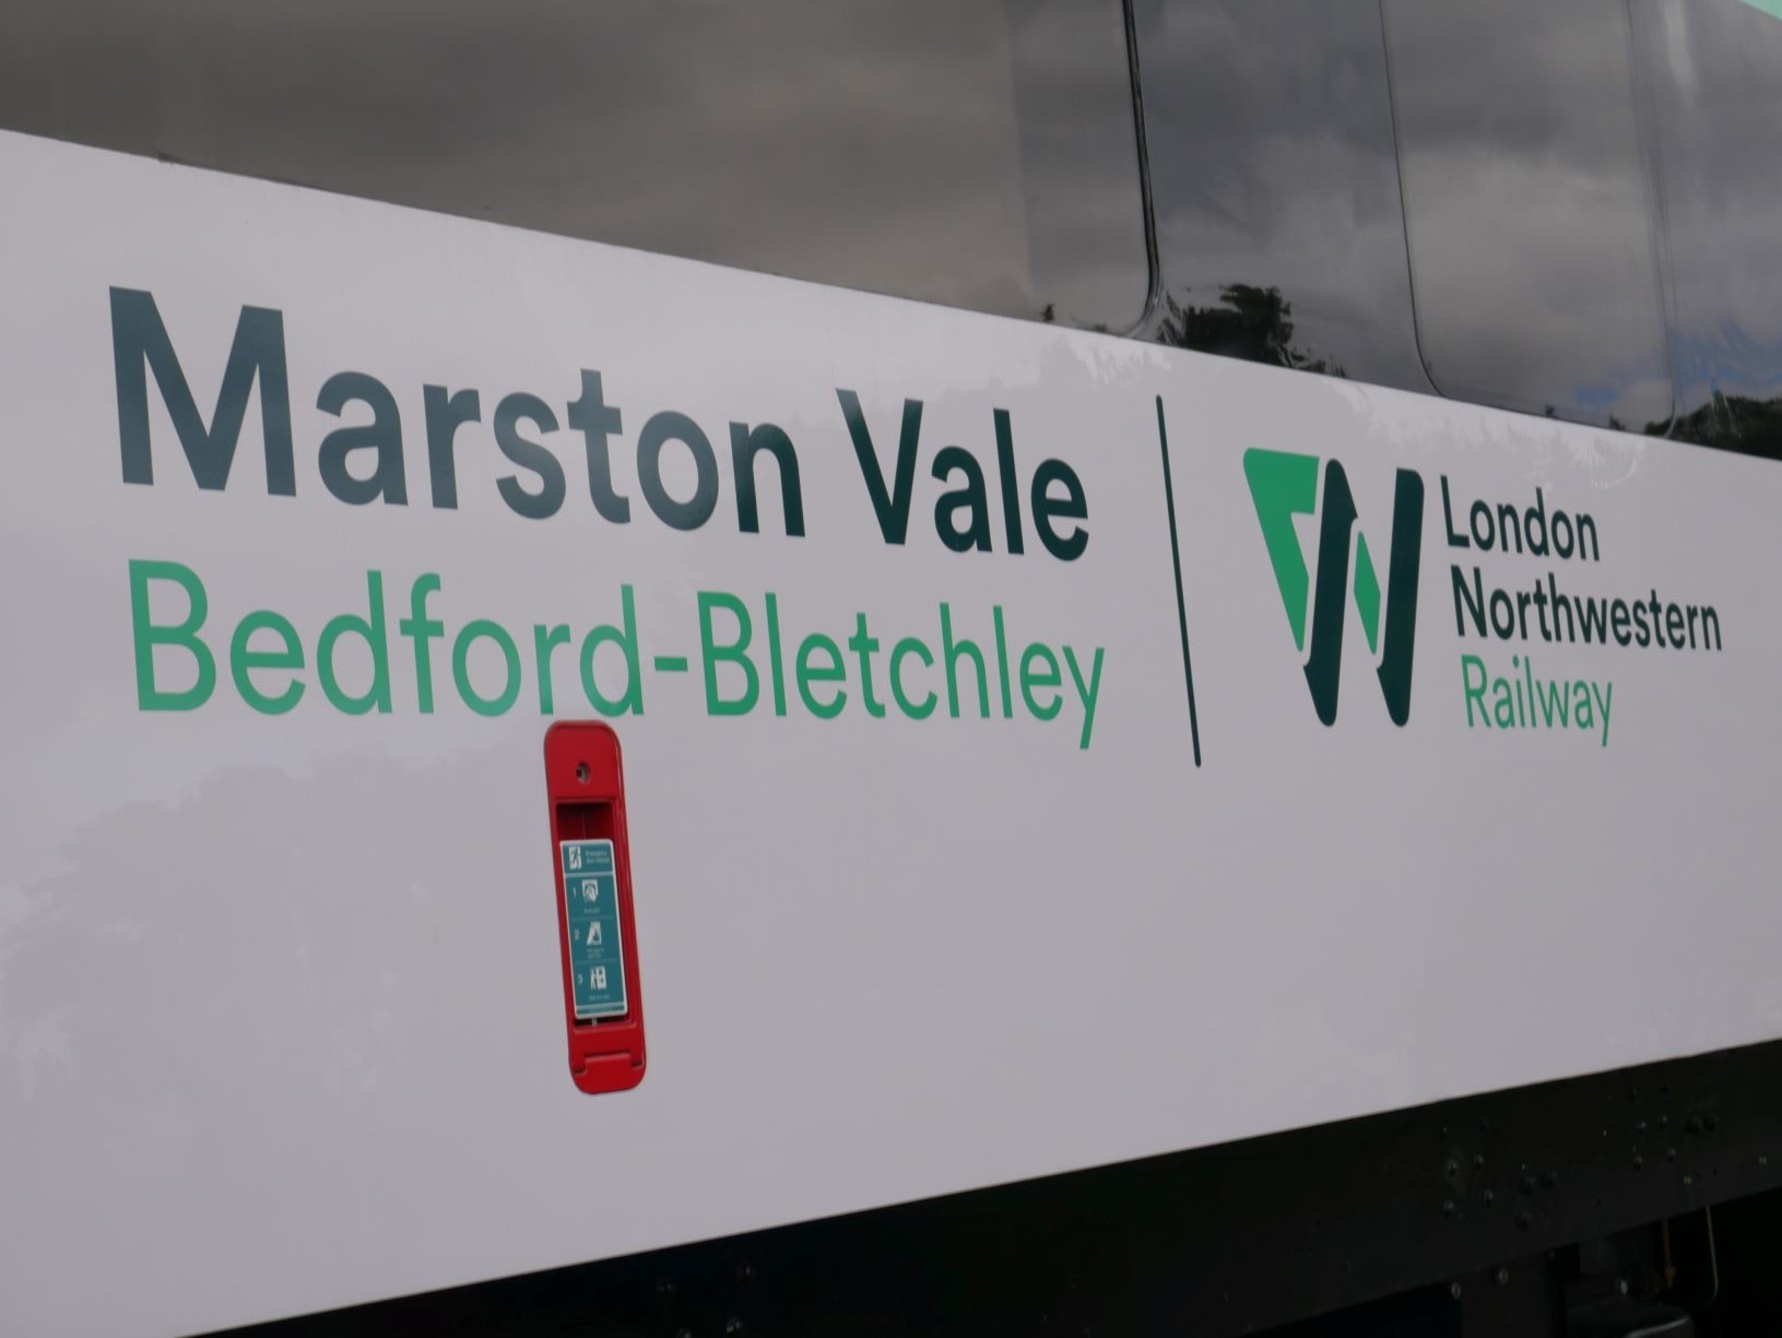 London Northwestern Railway: Train services to resume on Marston Vale Line